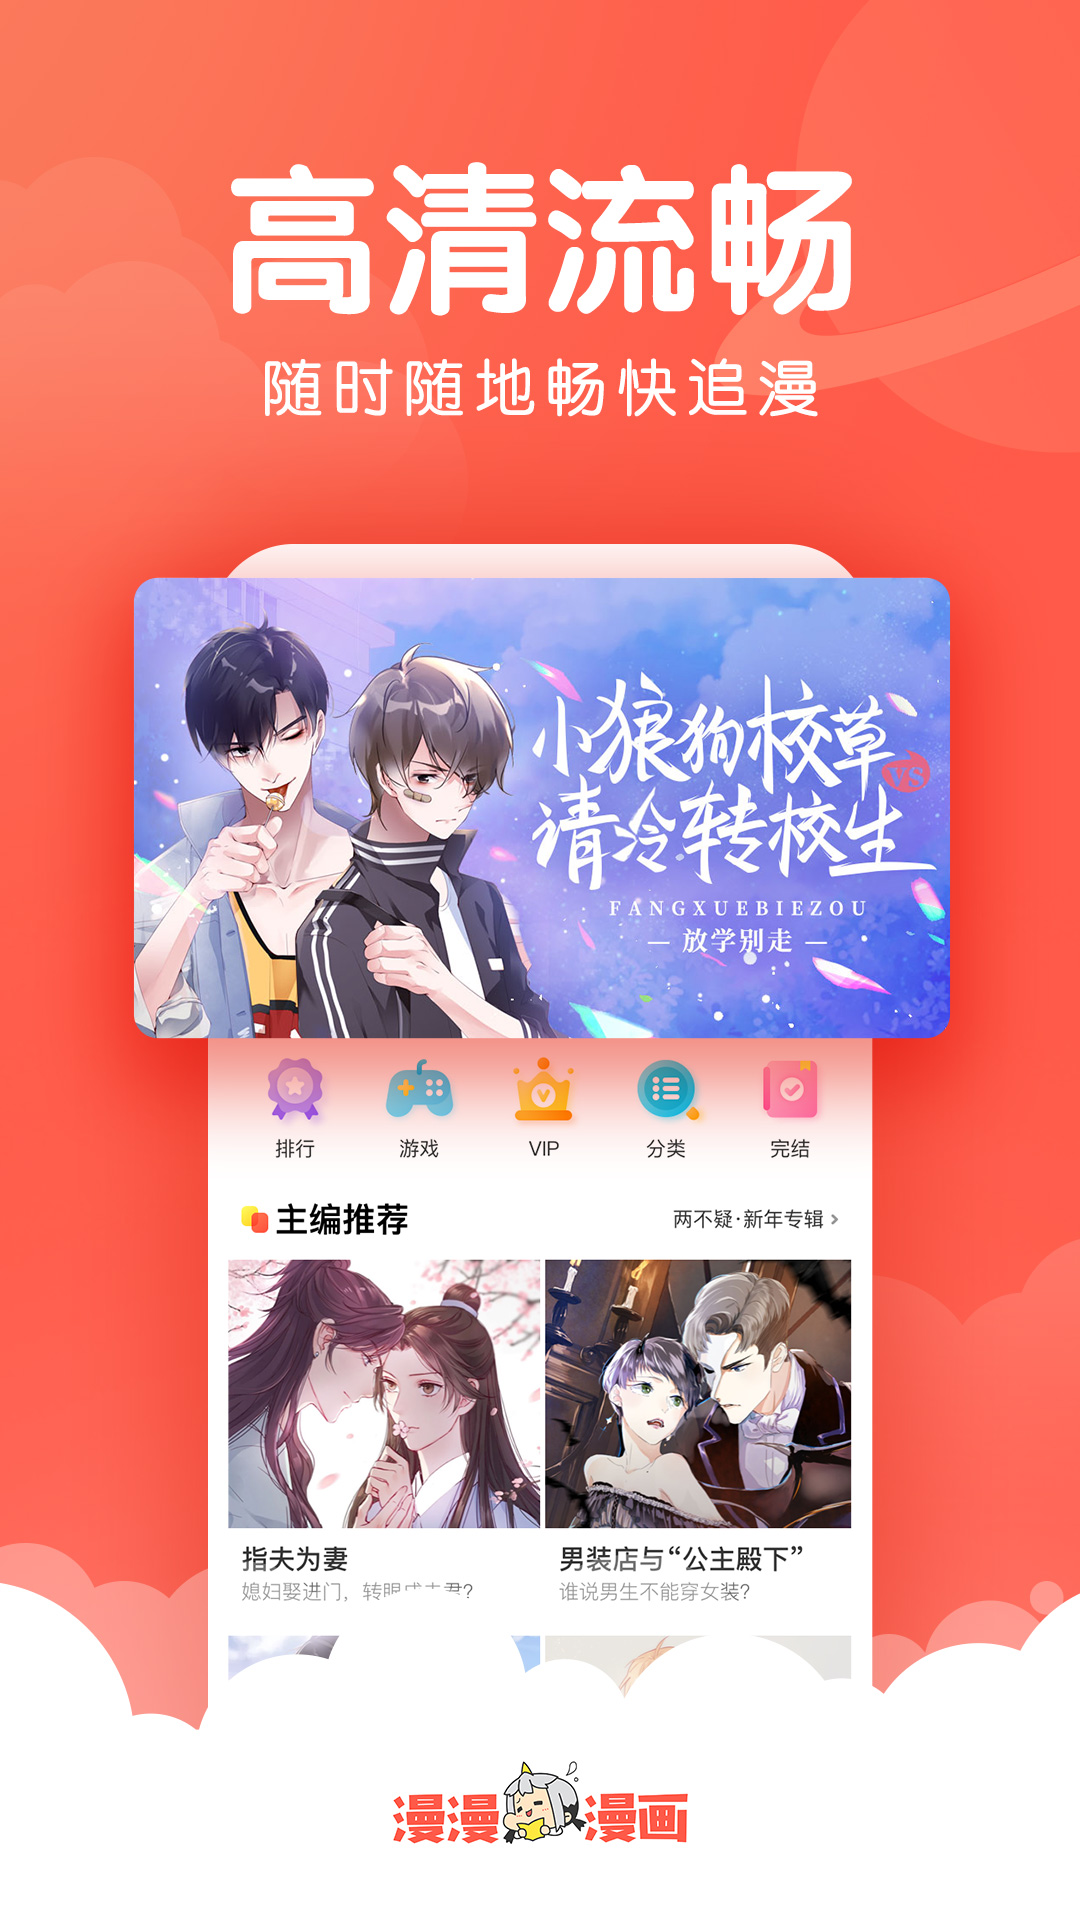 About: 韩漫之家 - 高清漫画大全 (iOS App Store version) | | Apptopia